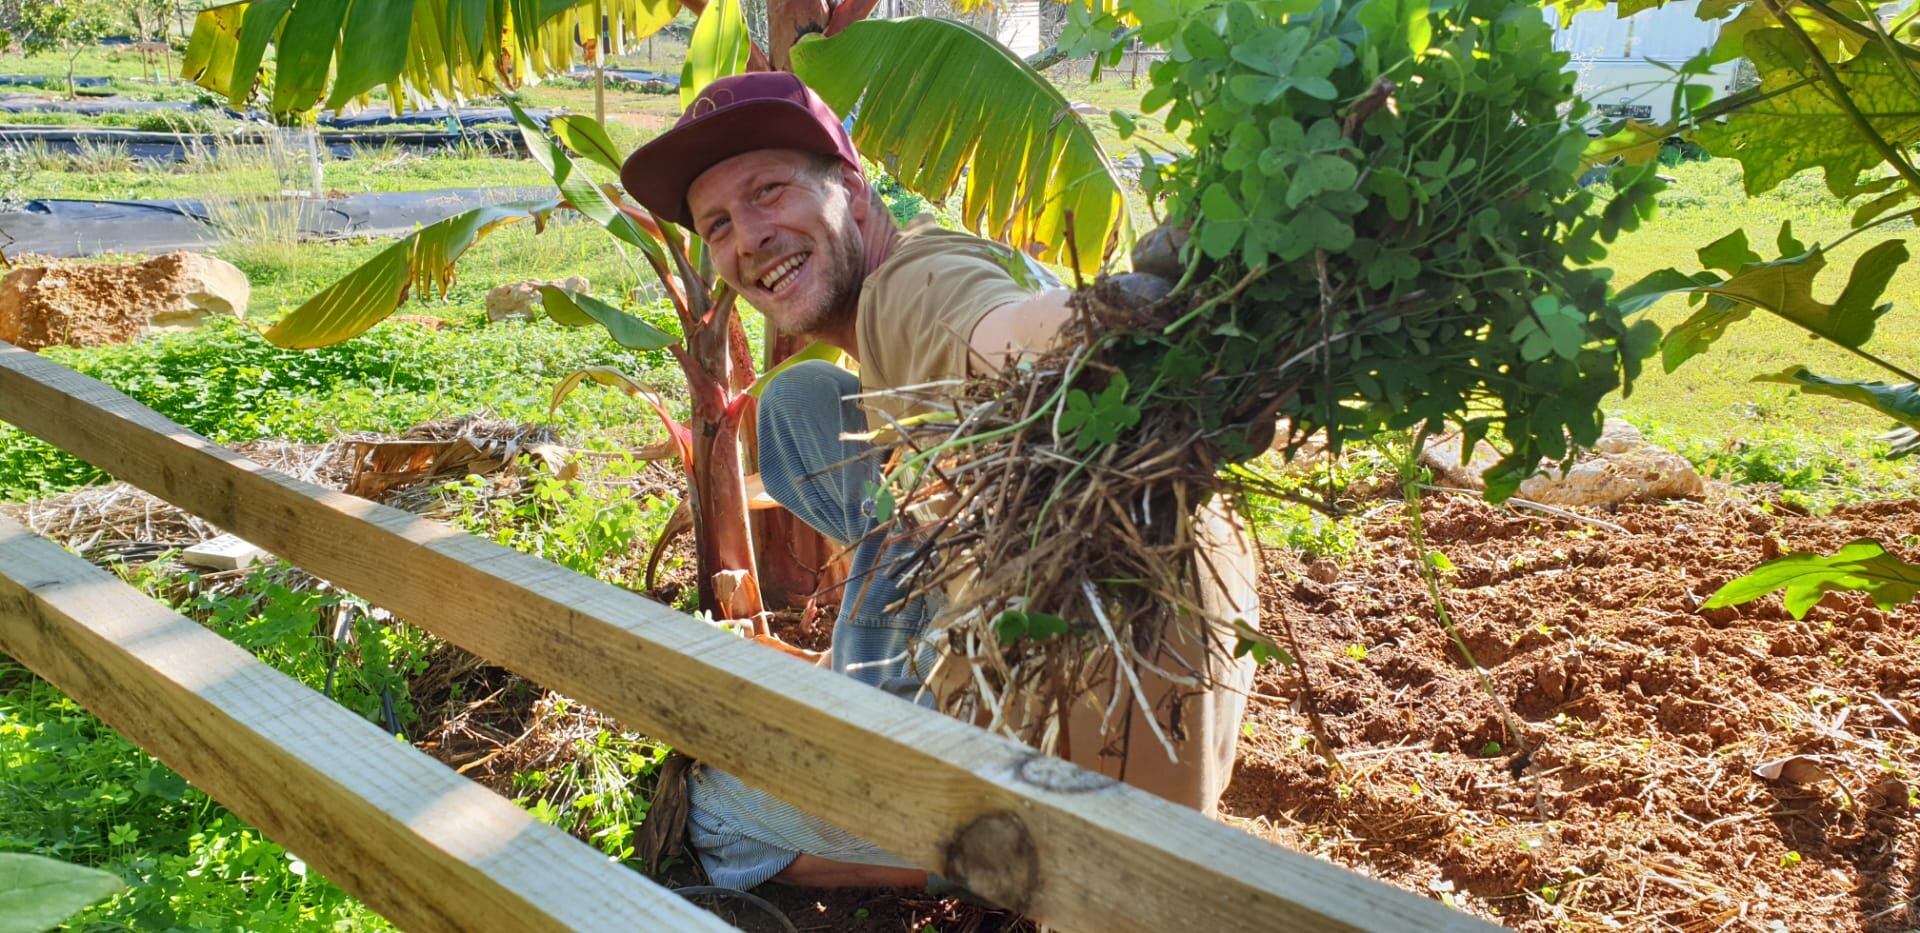 wwoofer from Germany fertilizing the banana trees